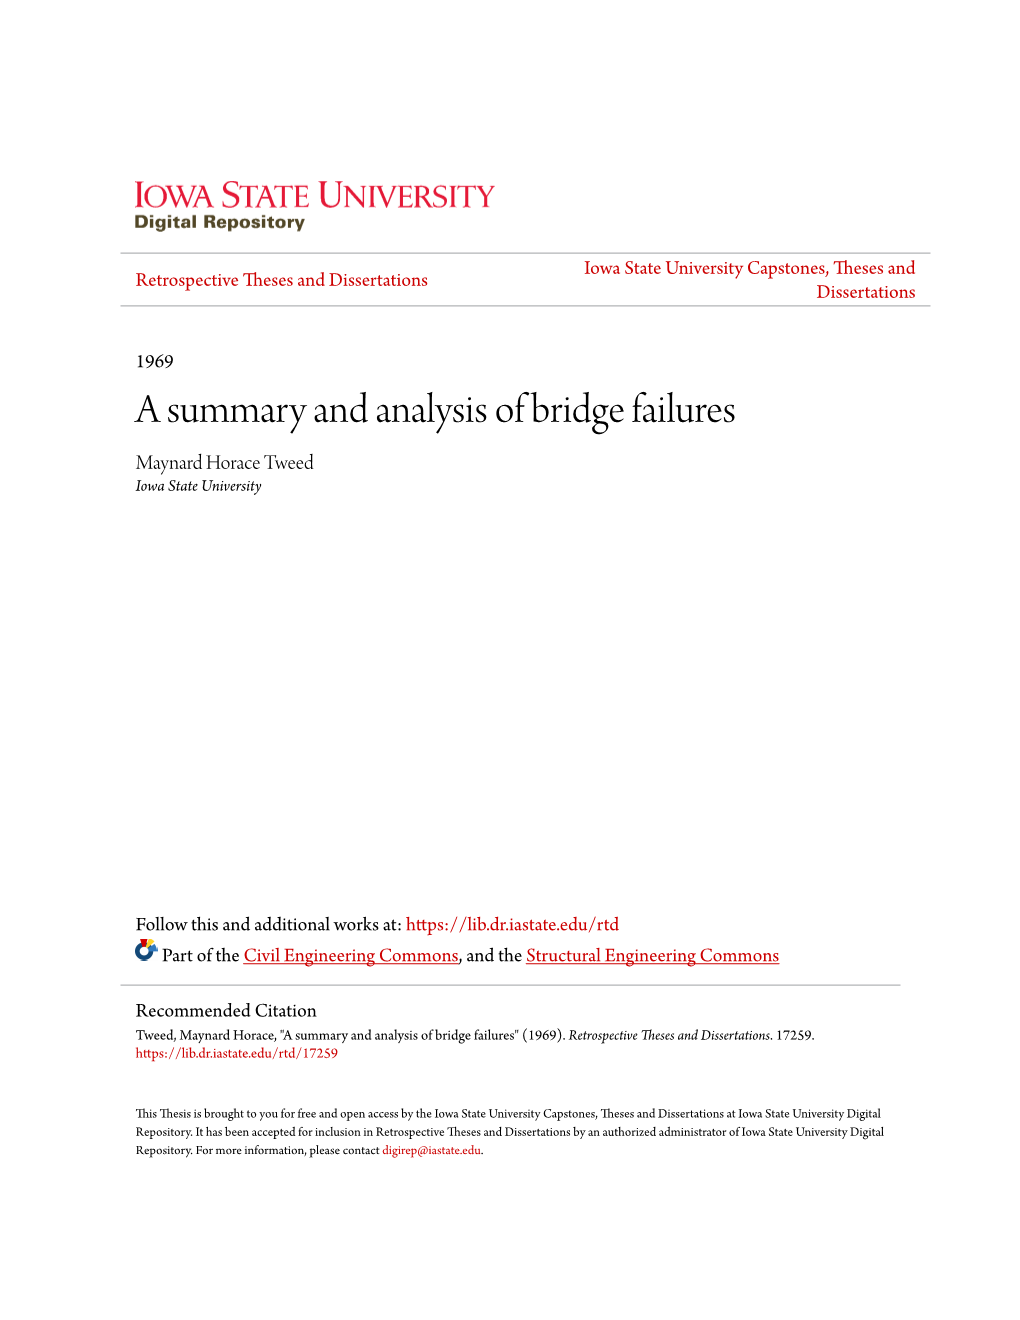 A Summary and Analysis of Bridge Failures Maynard Horace Tweed Iowa State University